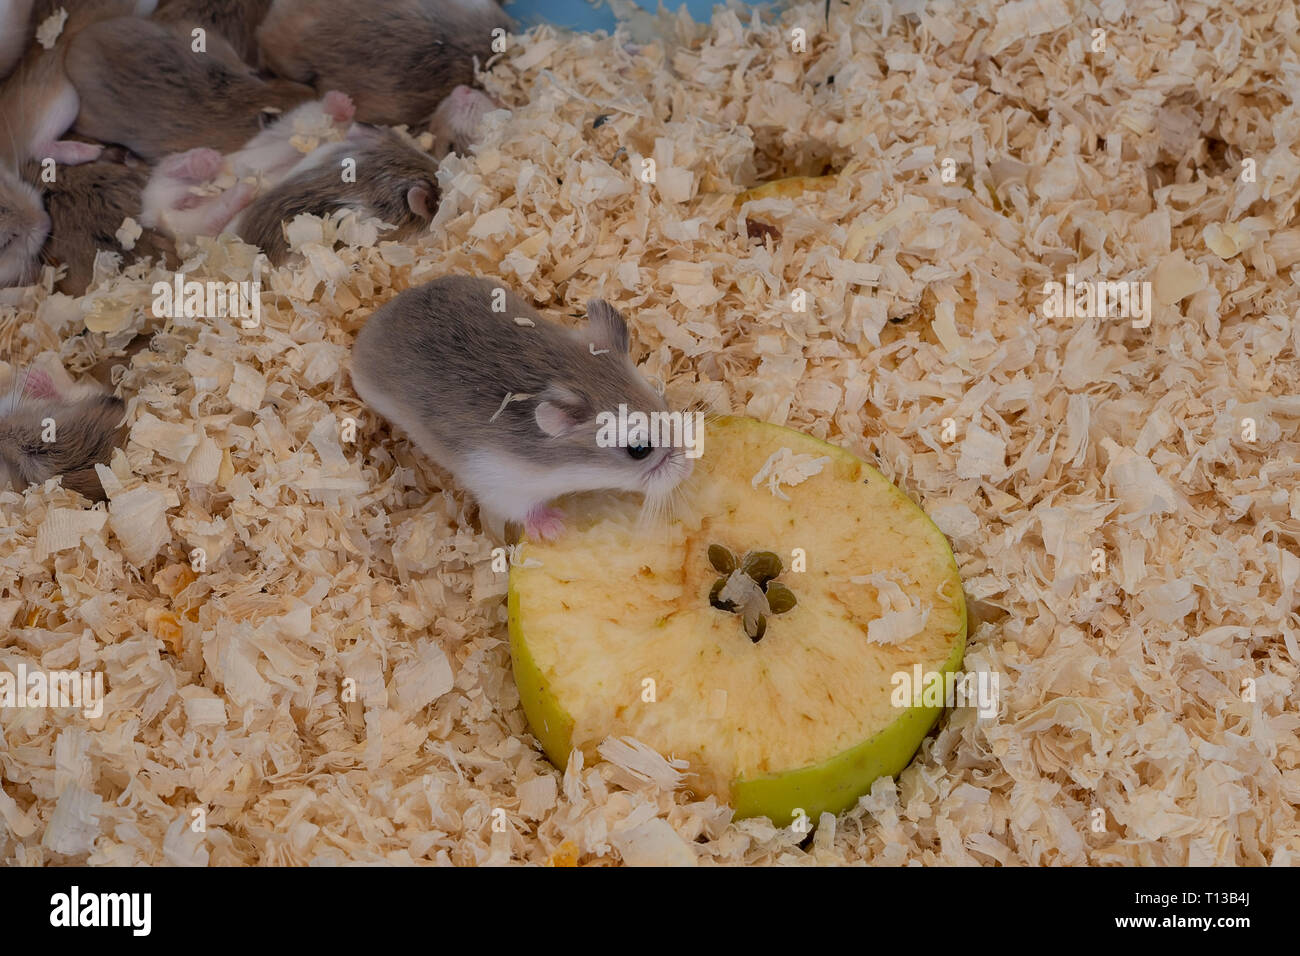 Tiny Roborovski dwarf hamsters for sale as pets in street market, one eating apple. Aka Robo, desert hamster. Cute. Stock Photo